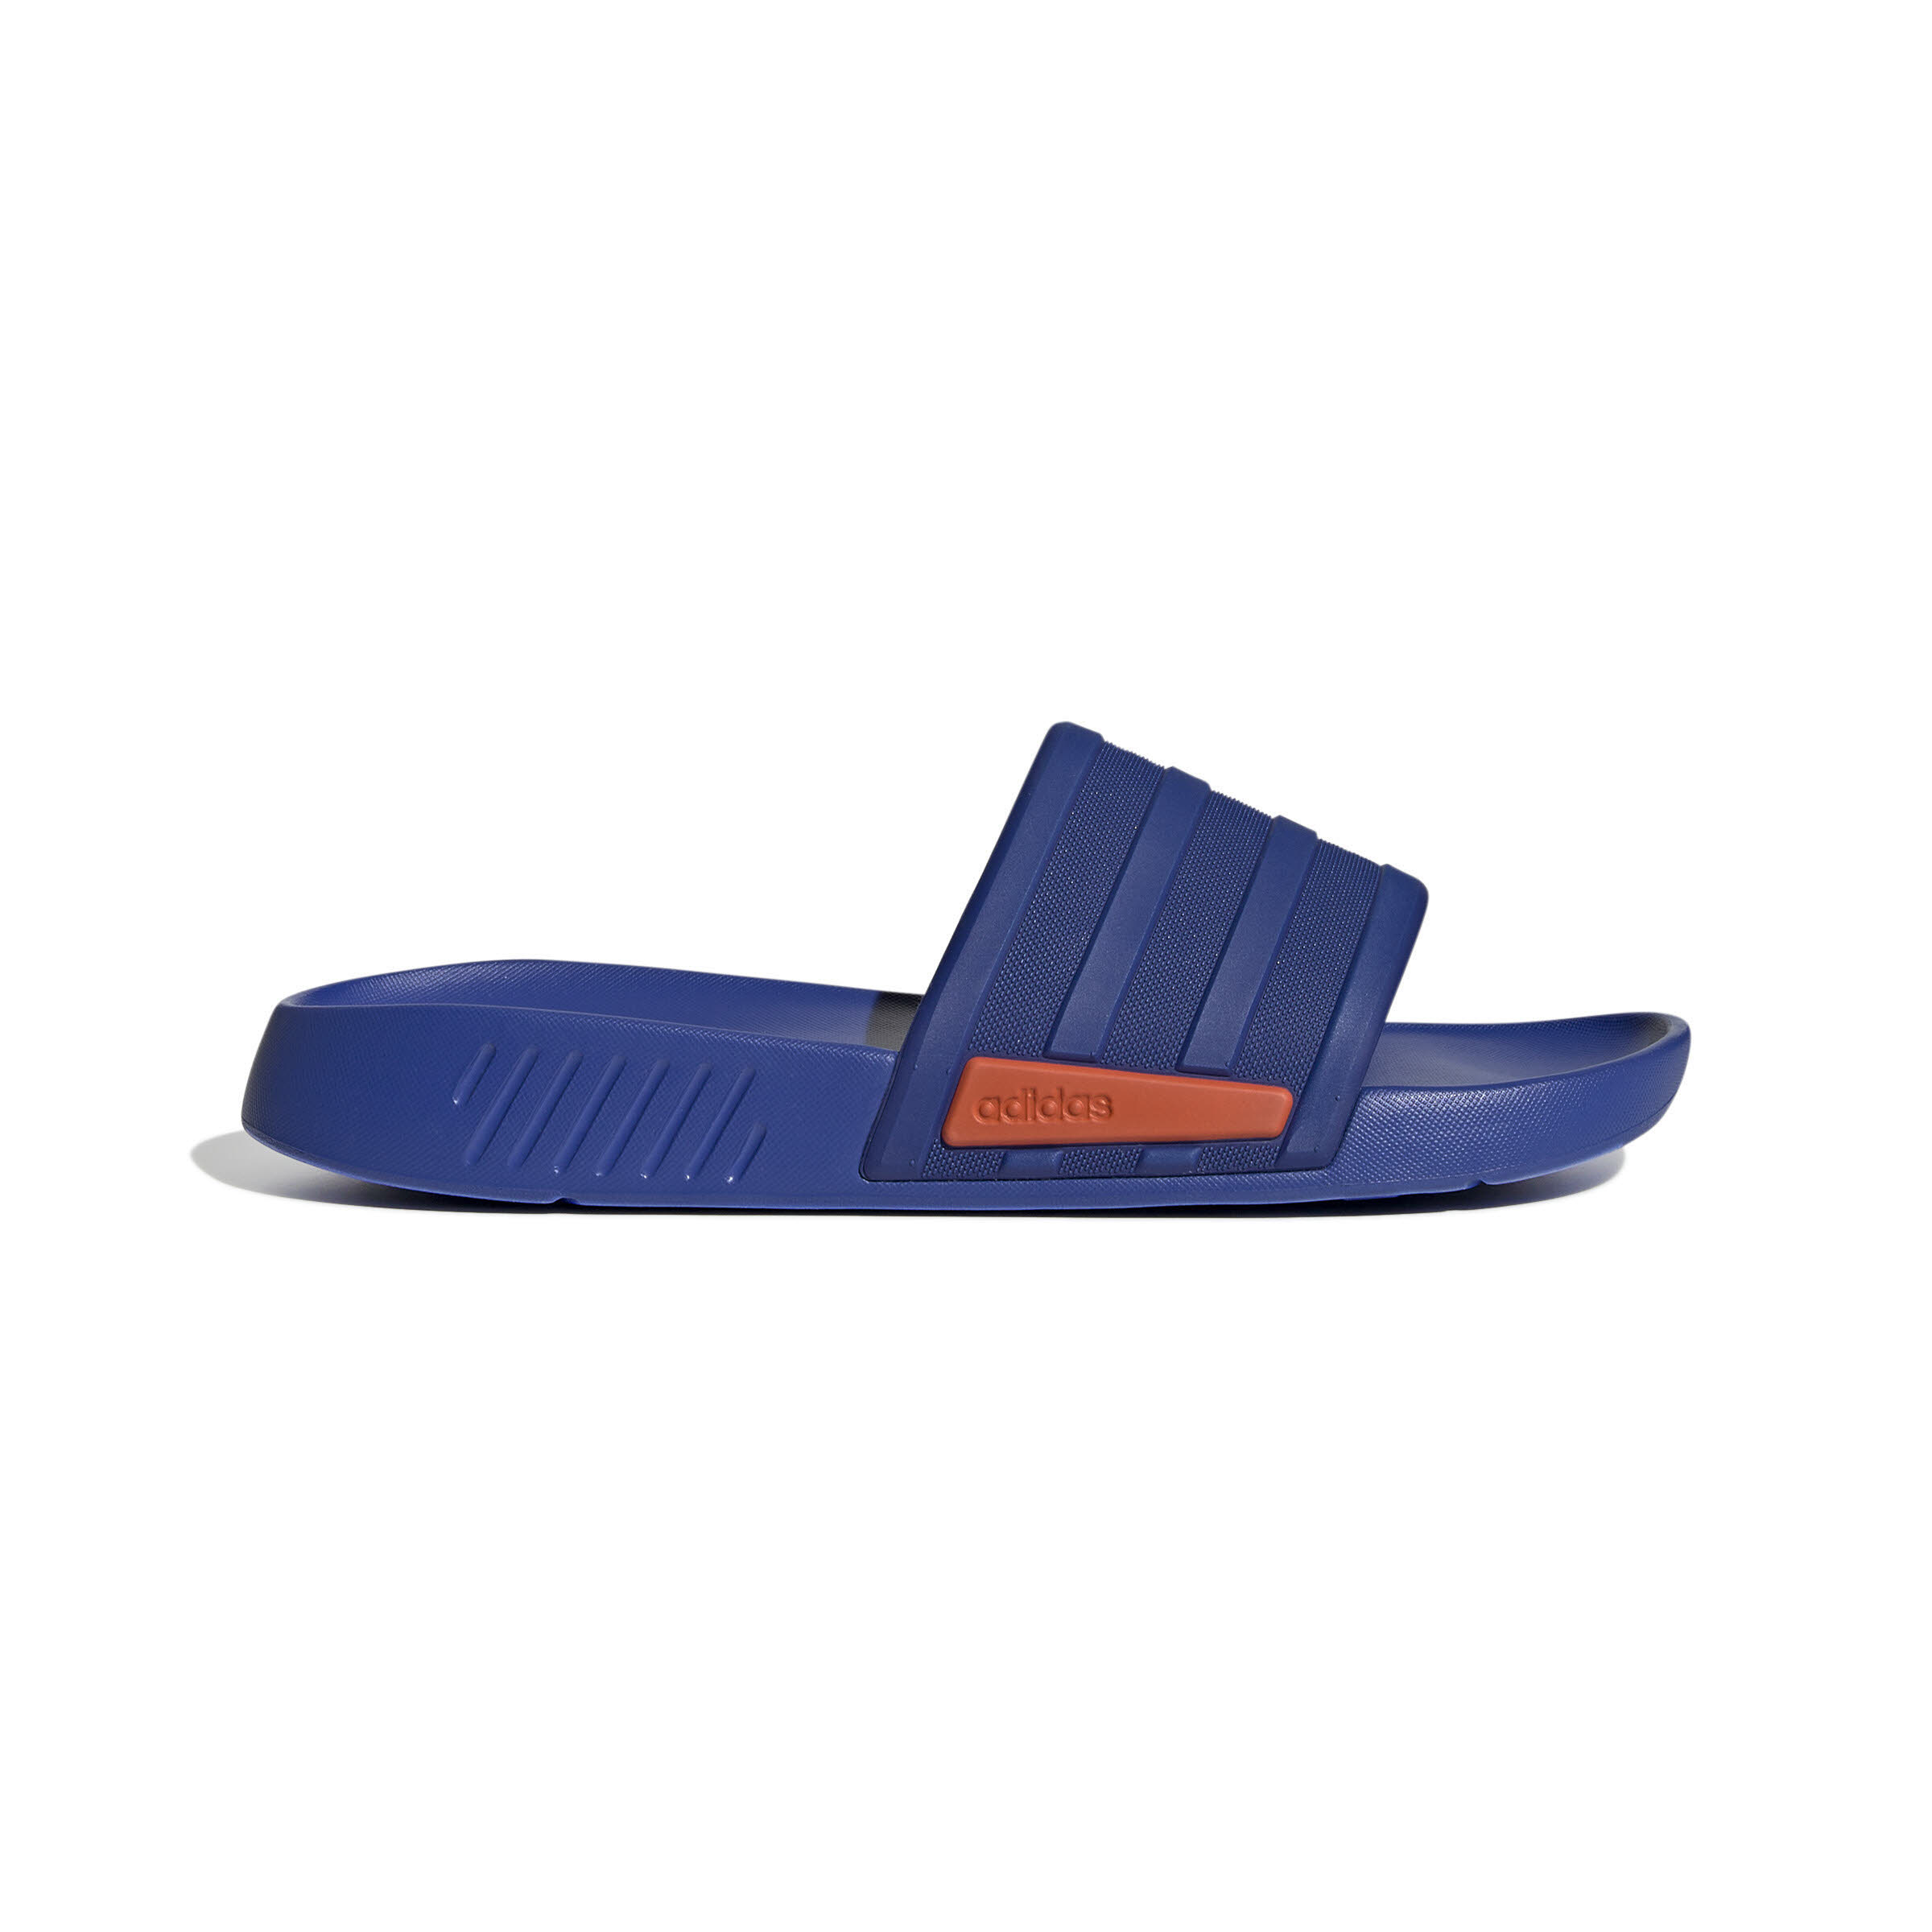 adidas Racer TR Slide Jungen Badeschuhe Blau Orange